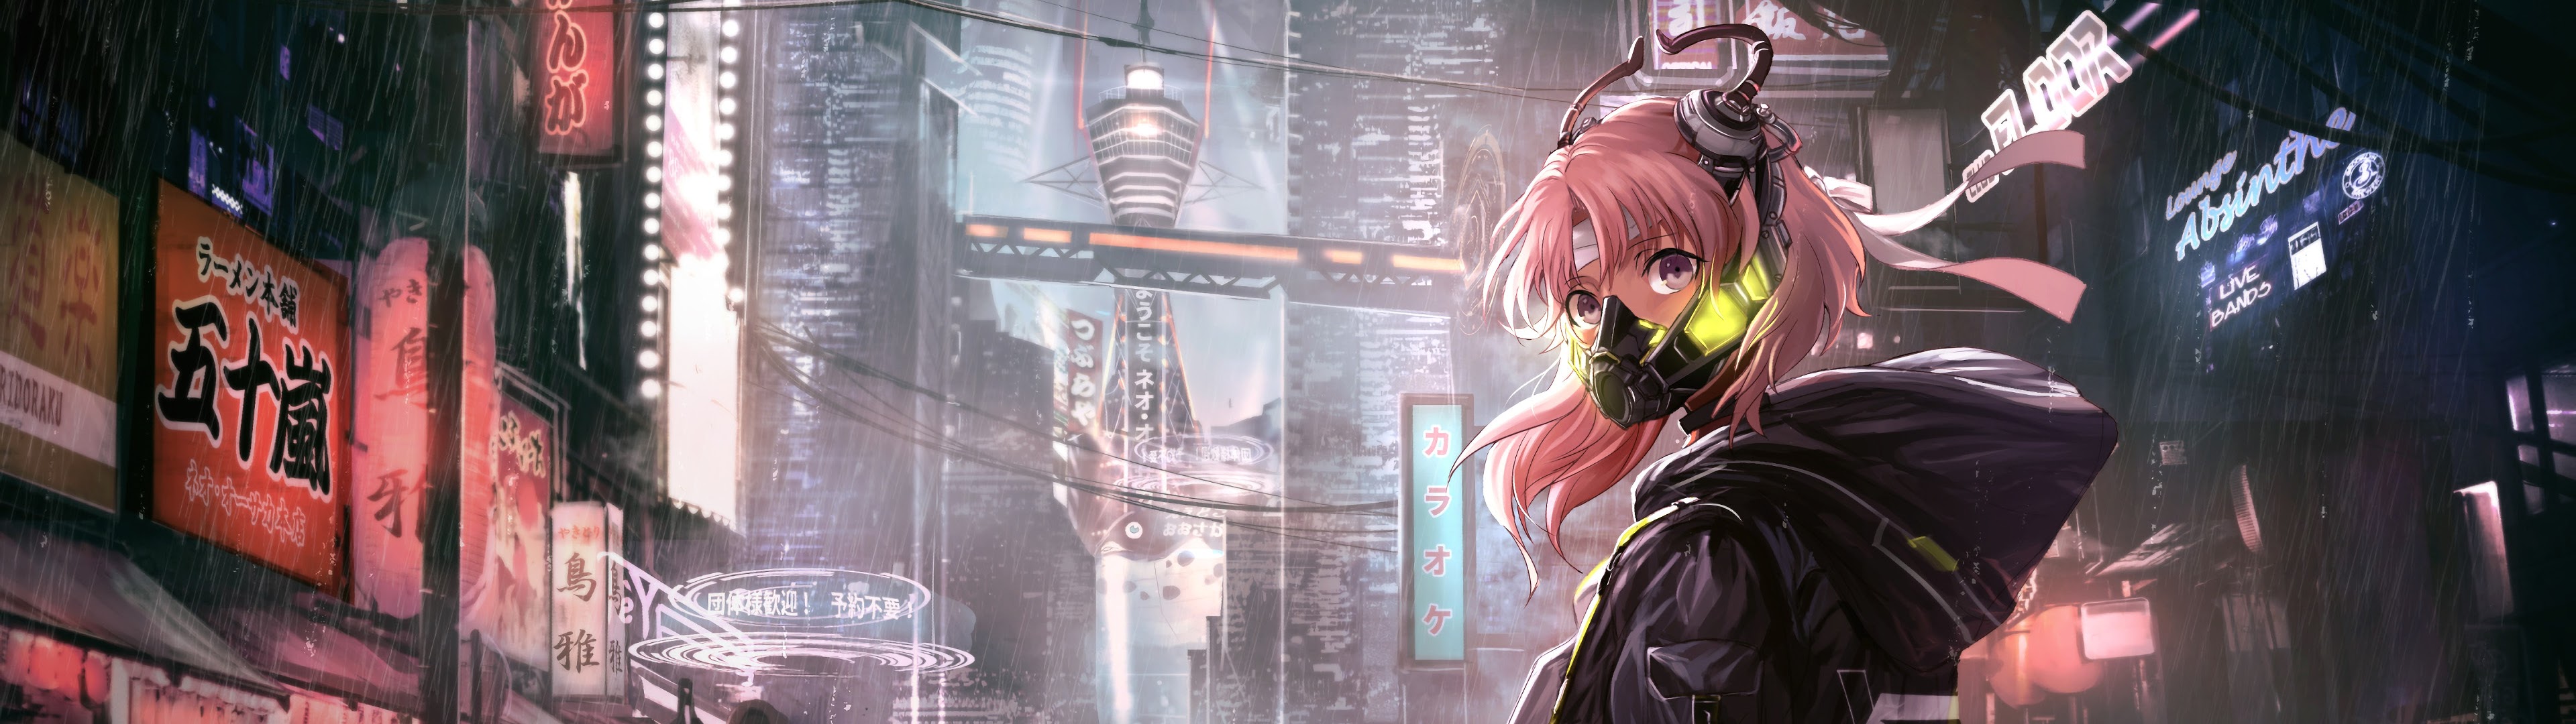  Anime  Girl Mask Cyberpunk Sci Fi 4K  168 Wallpaper 